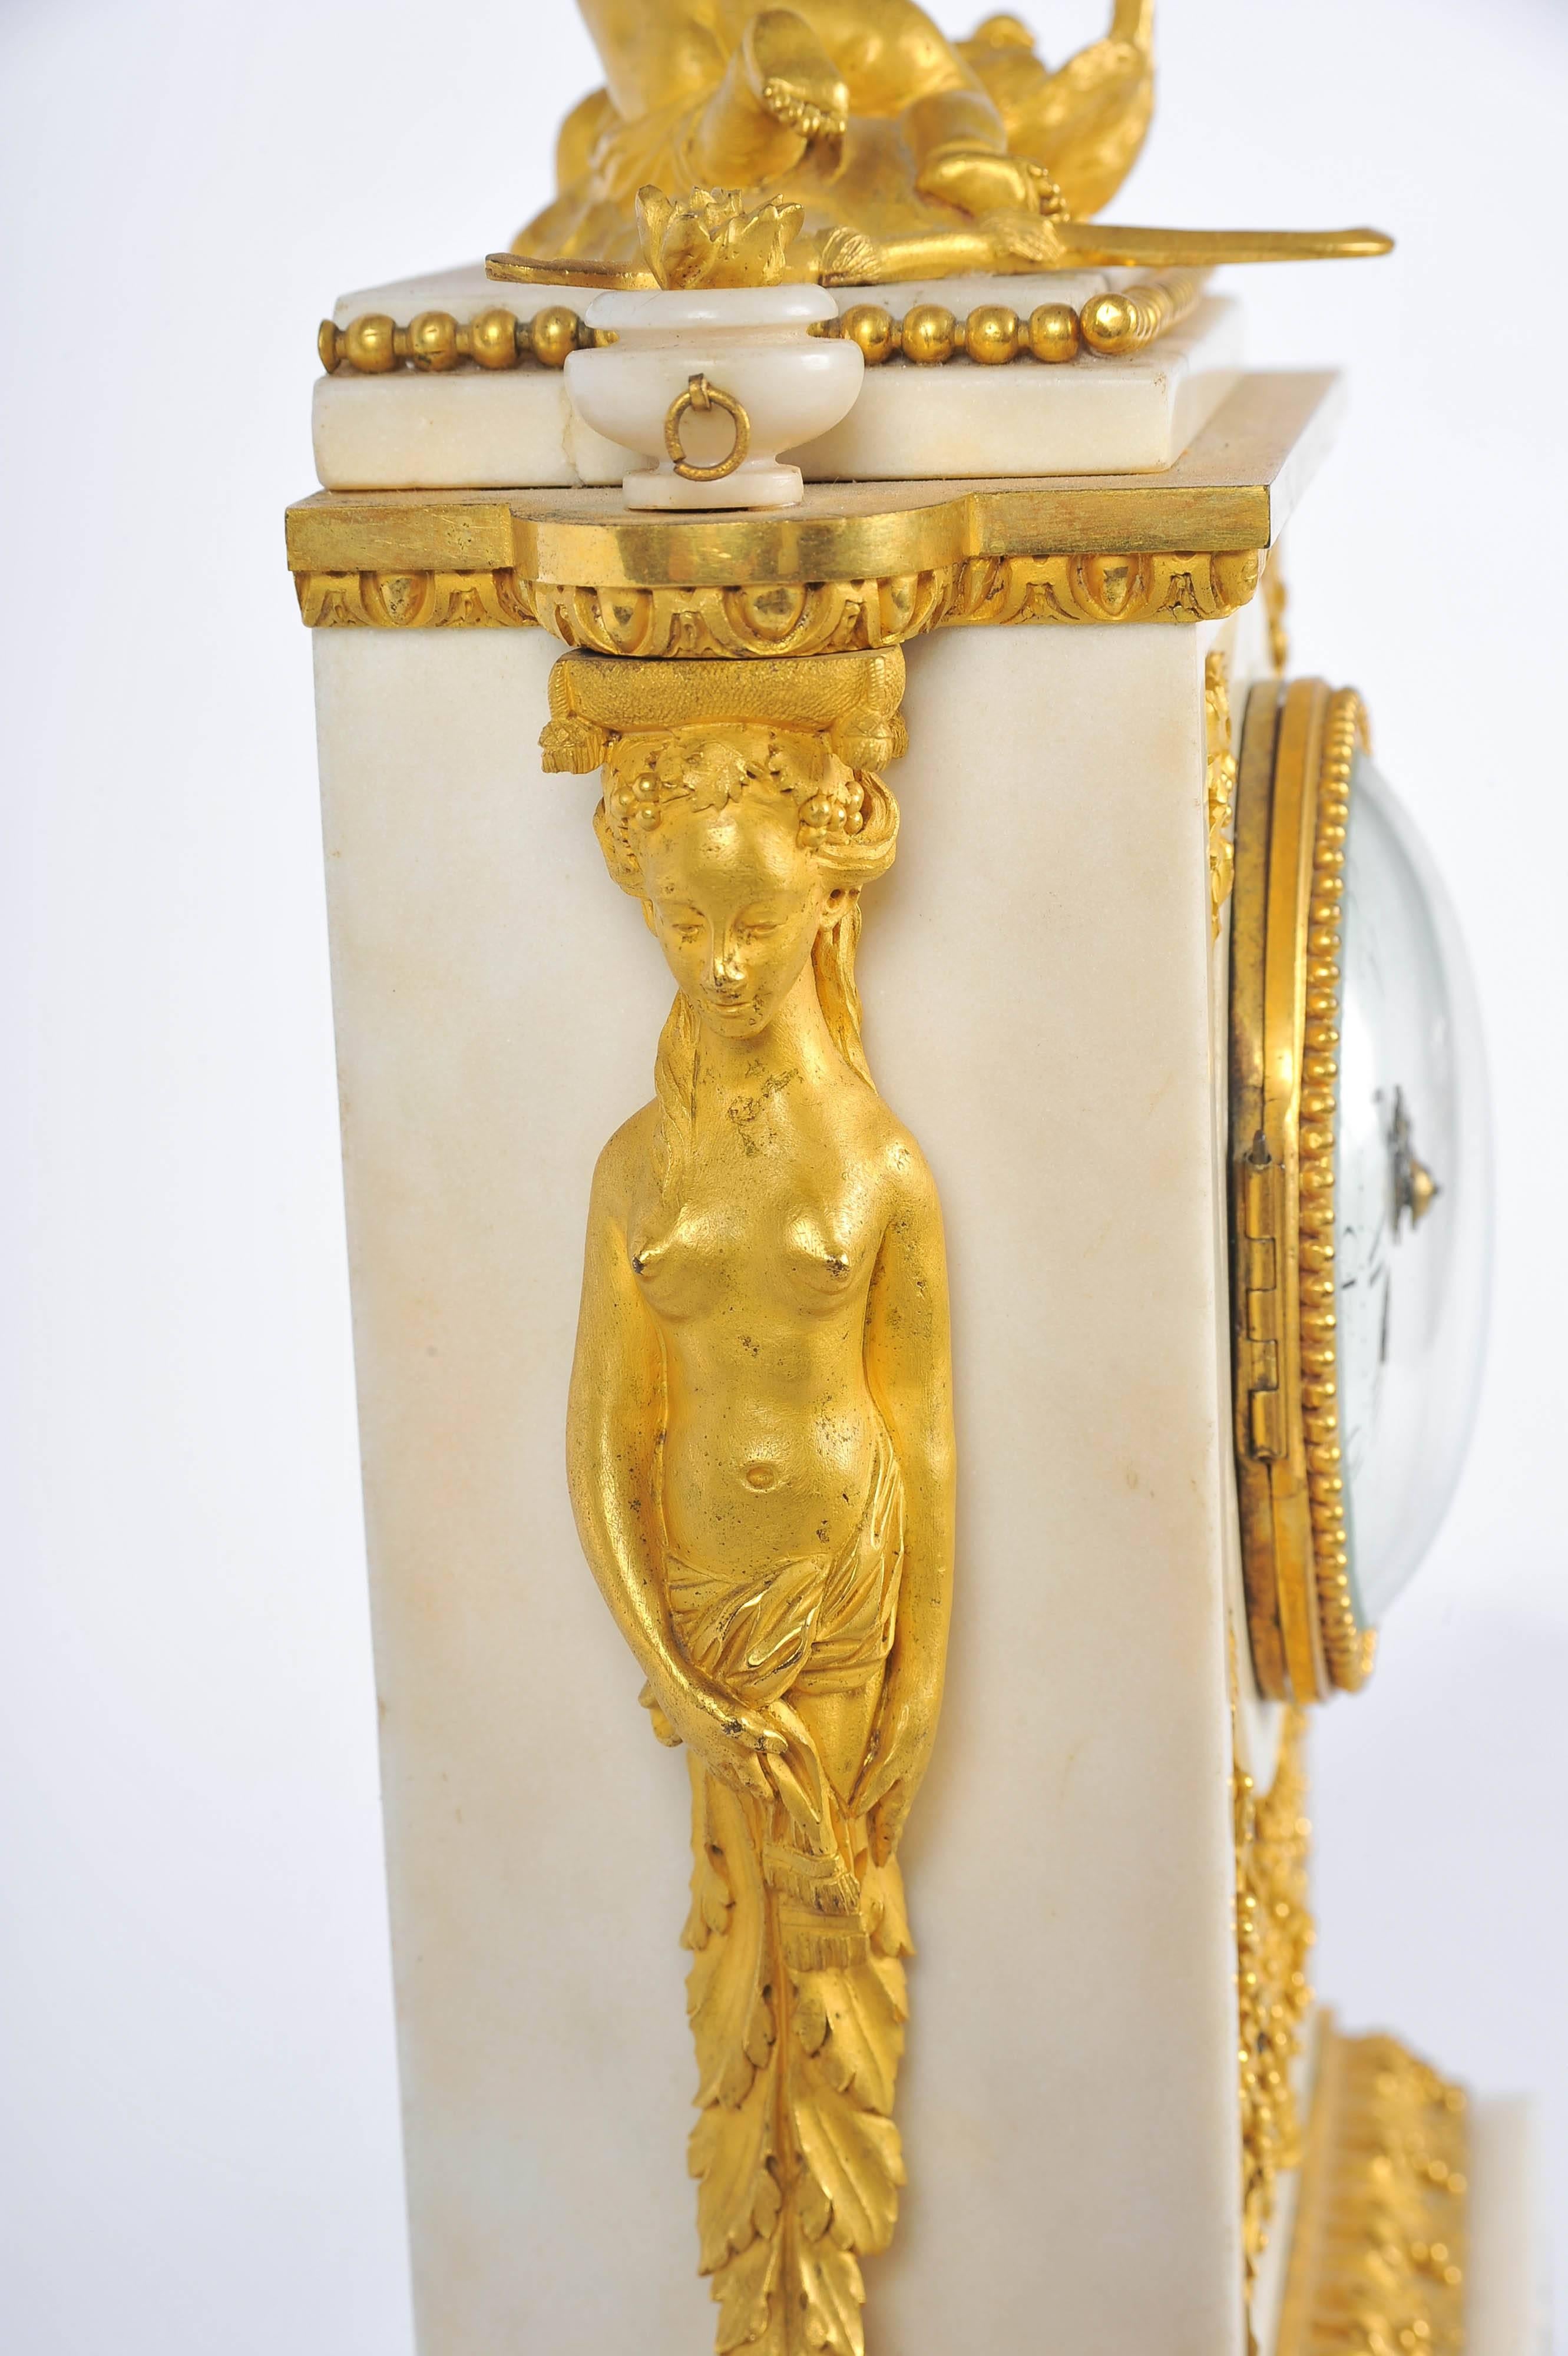 Ormolu 19th Century French Mantel Clock, Louis XVI style, by Festeau, Paris